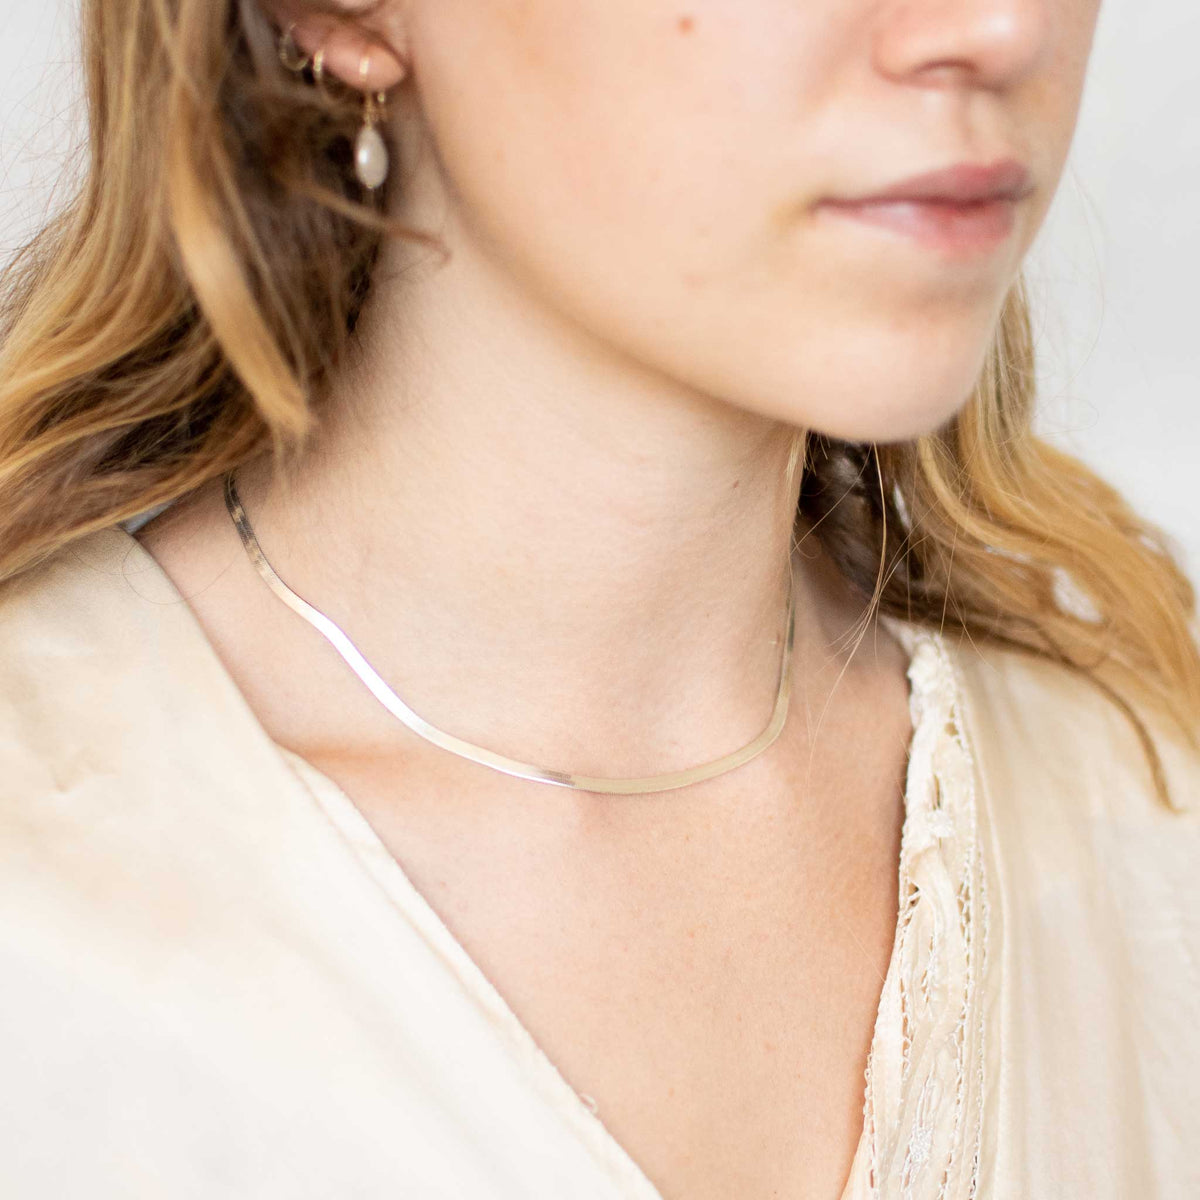 model wearing silver herringbone necklace in a close up shot. 